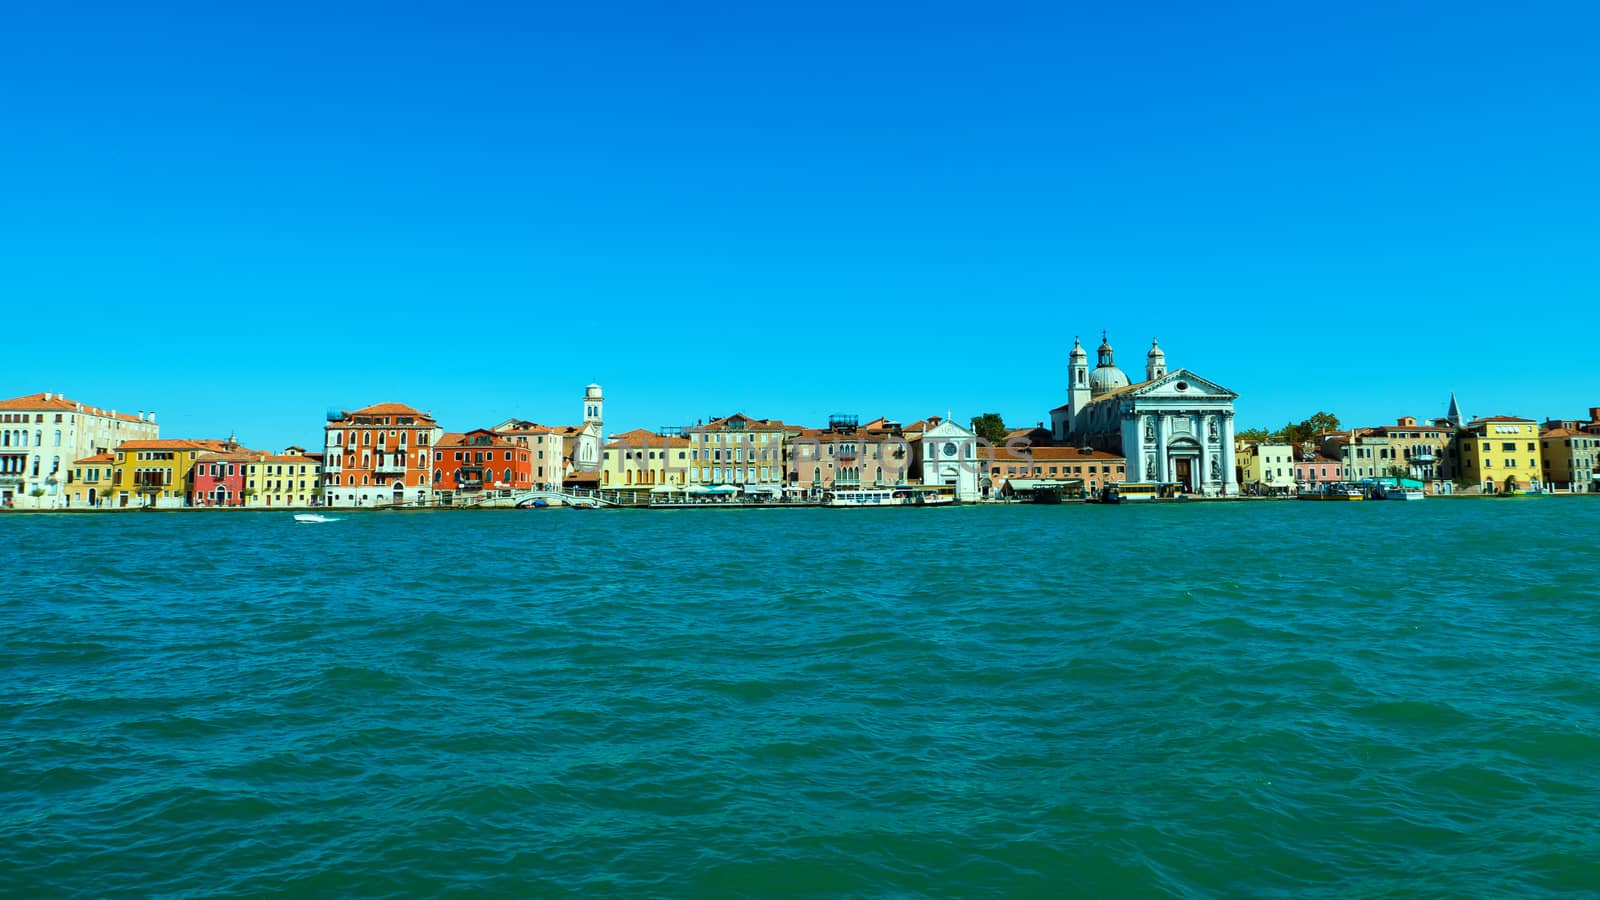 Venice skyline  from Giudecca canal view, Venice, Italy.